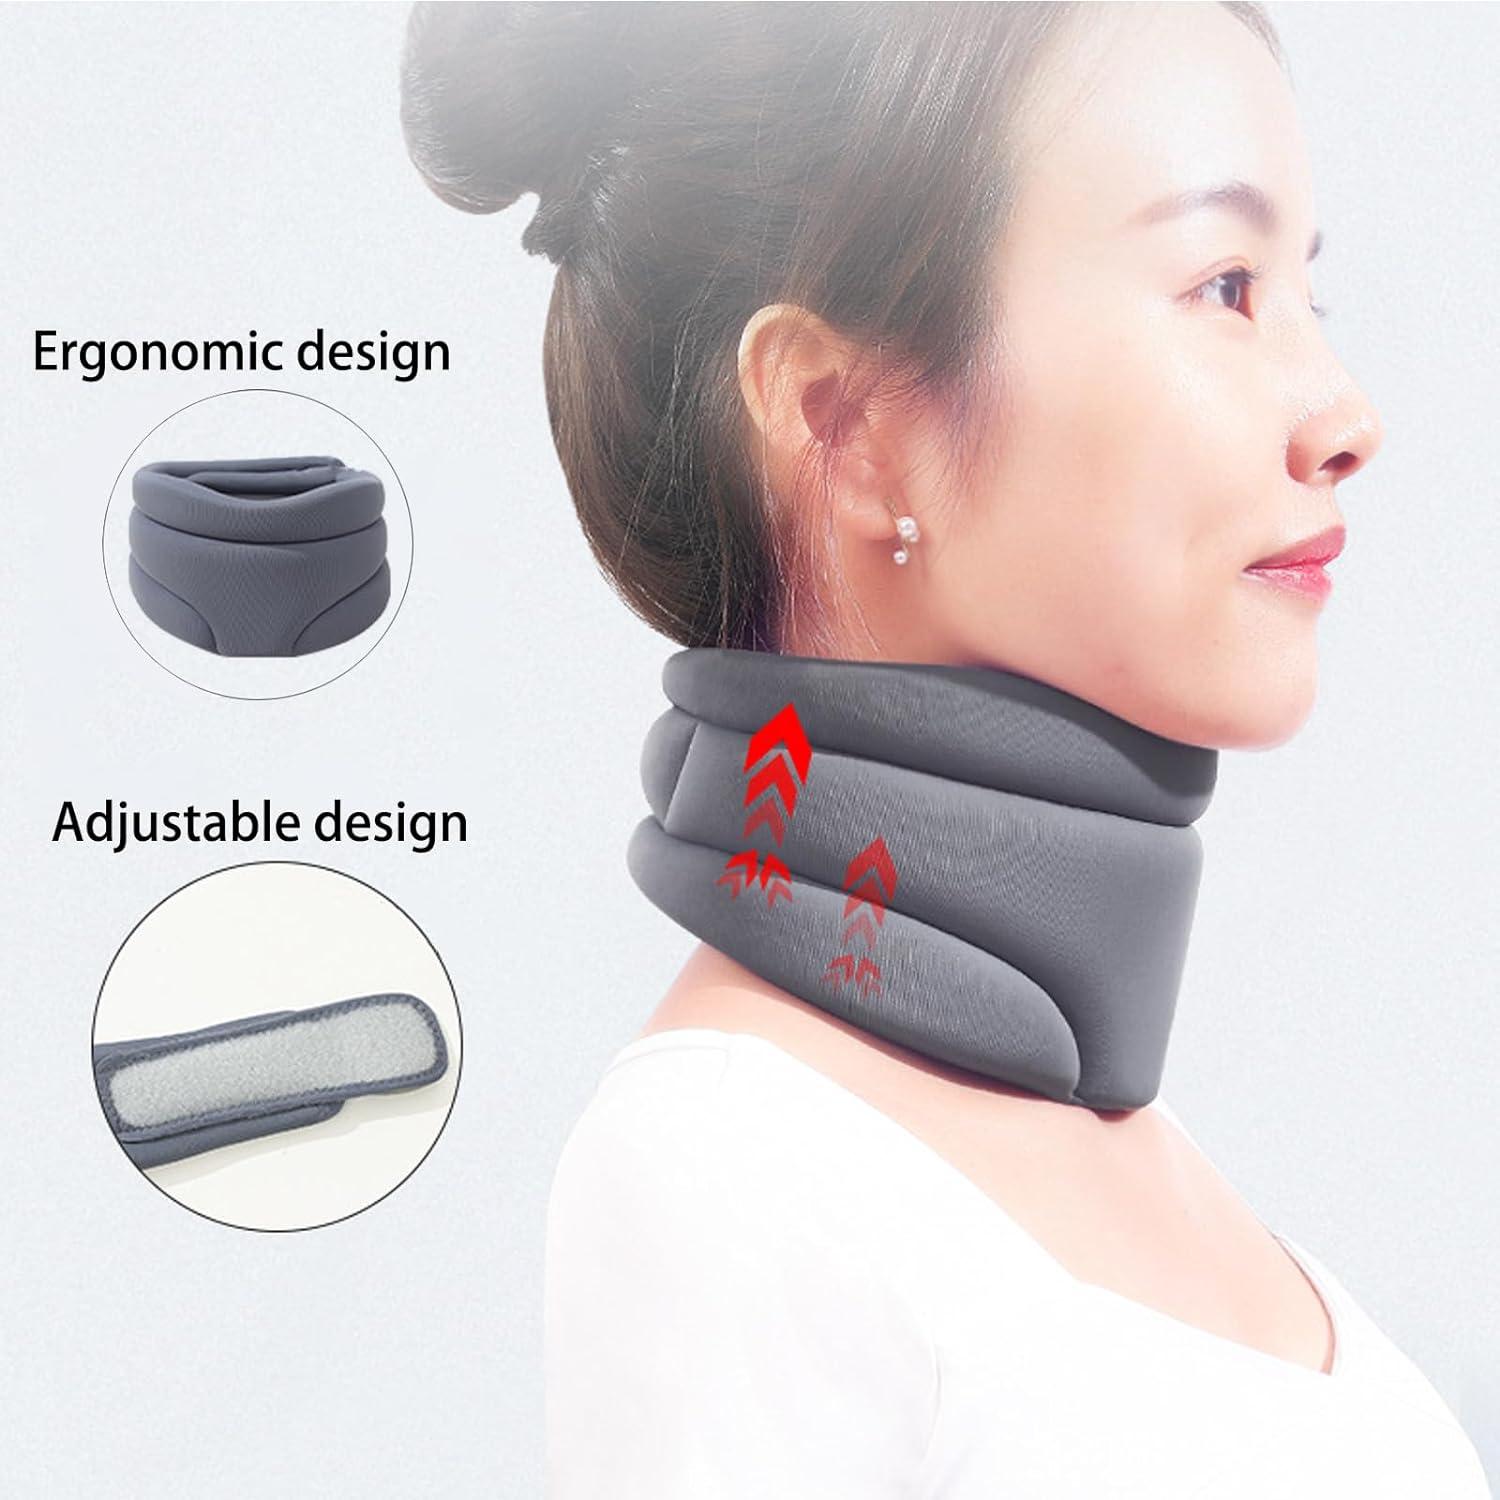 Premium Universal Soft Foam Neck Support Brace/Cervical Collar